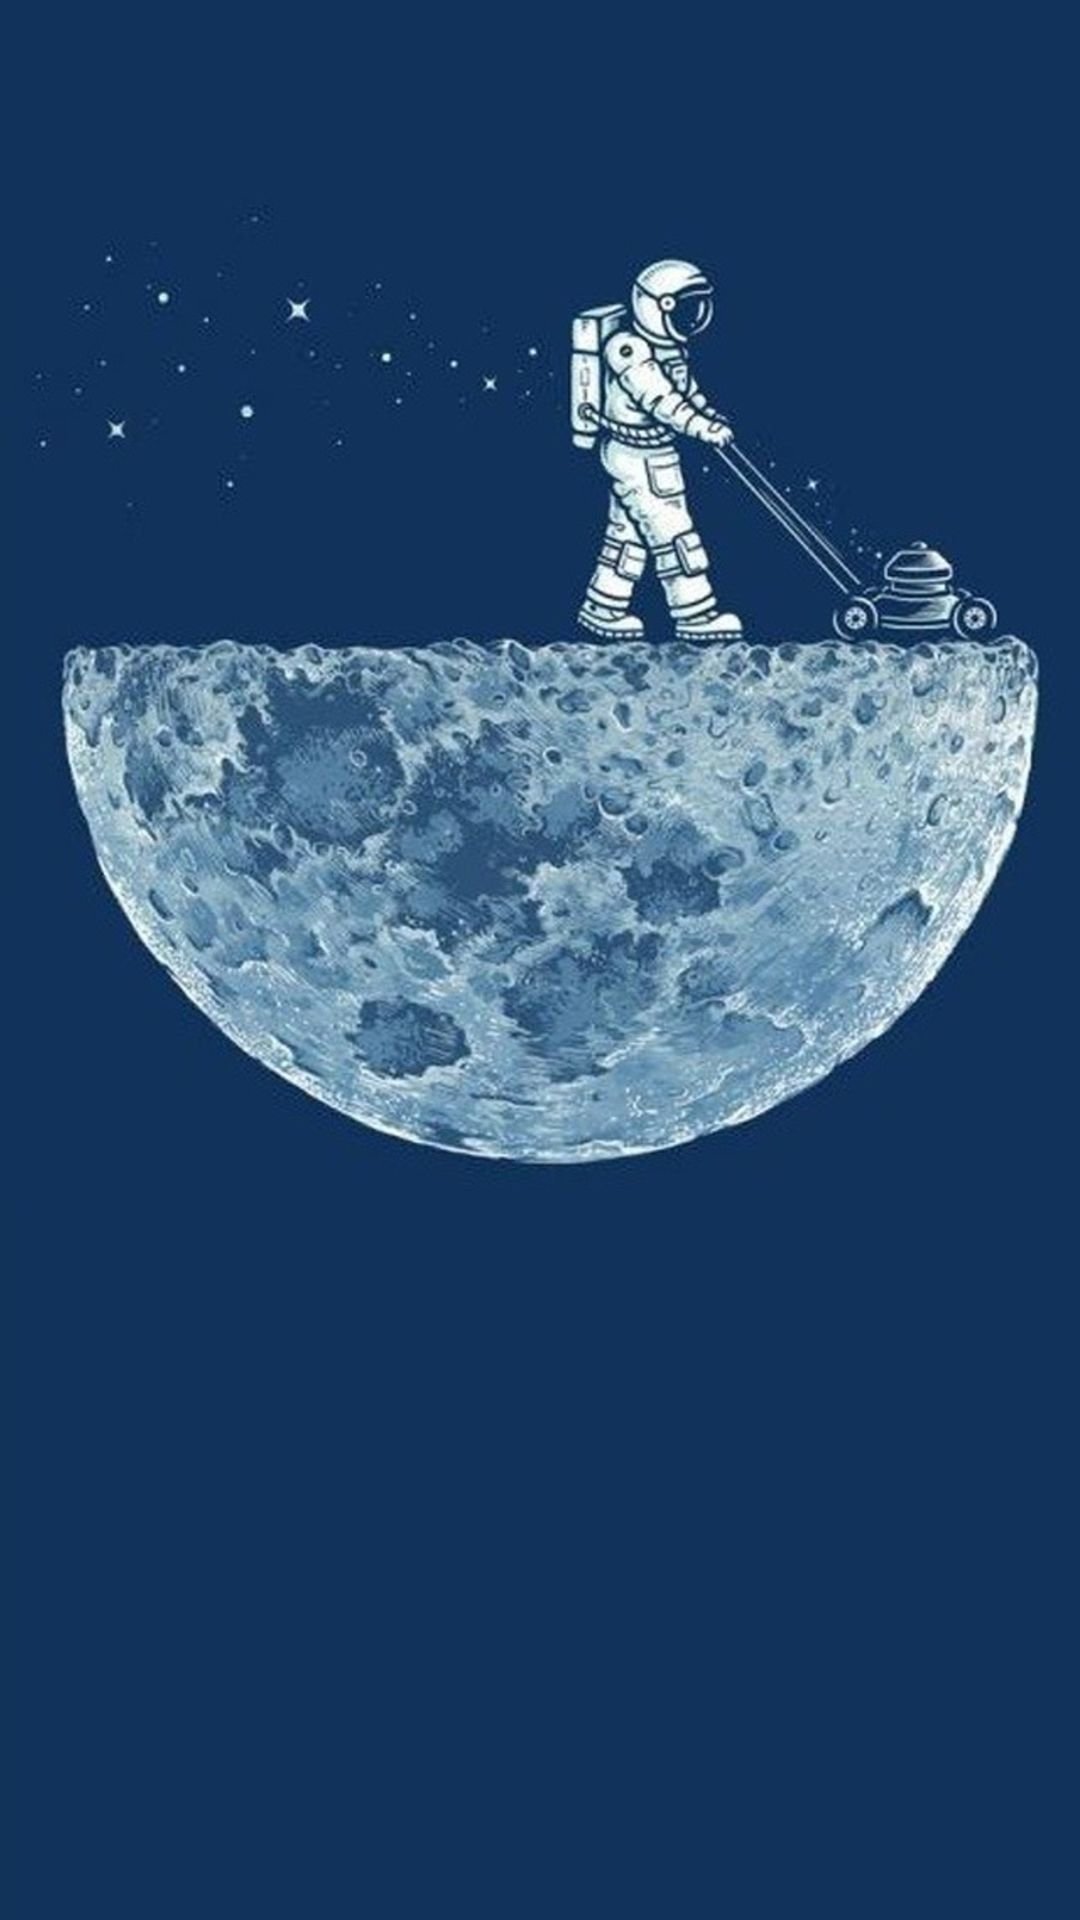 iPhone 7 Space Wallpaper Cartoon .wallpapertip.com